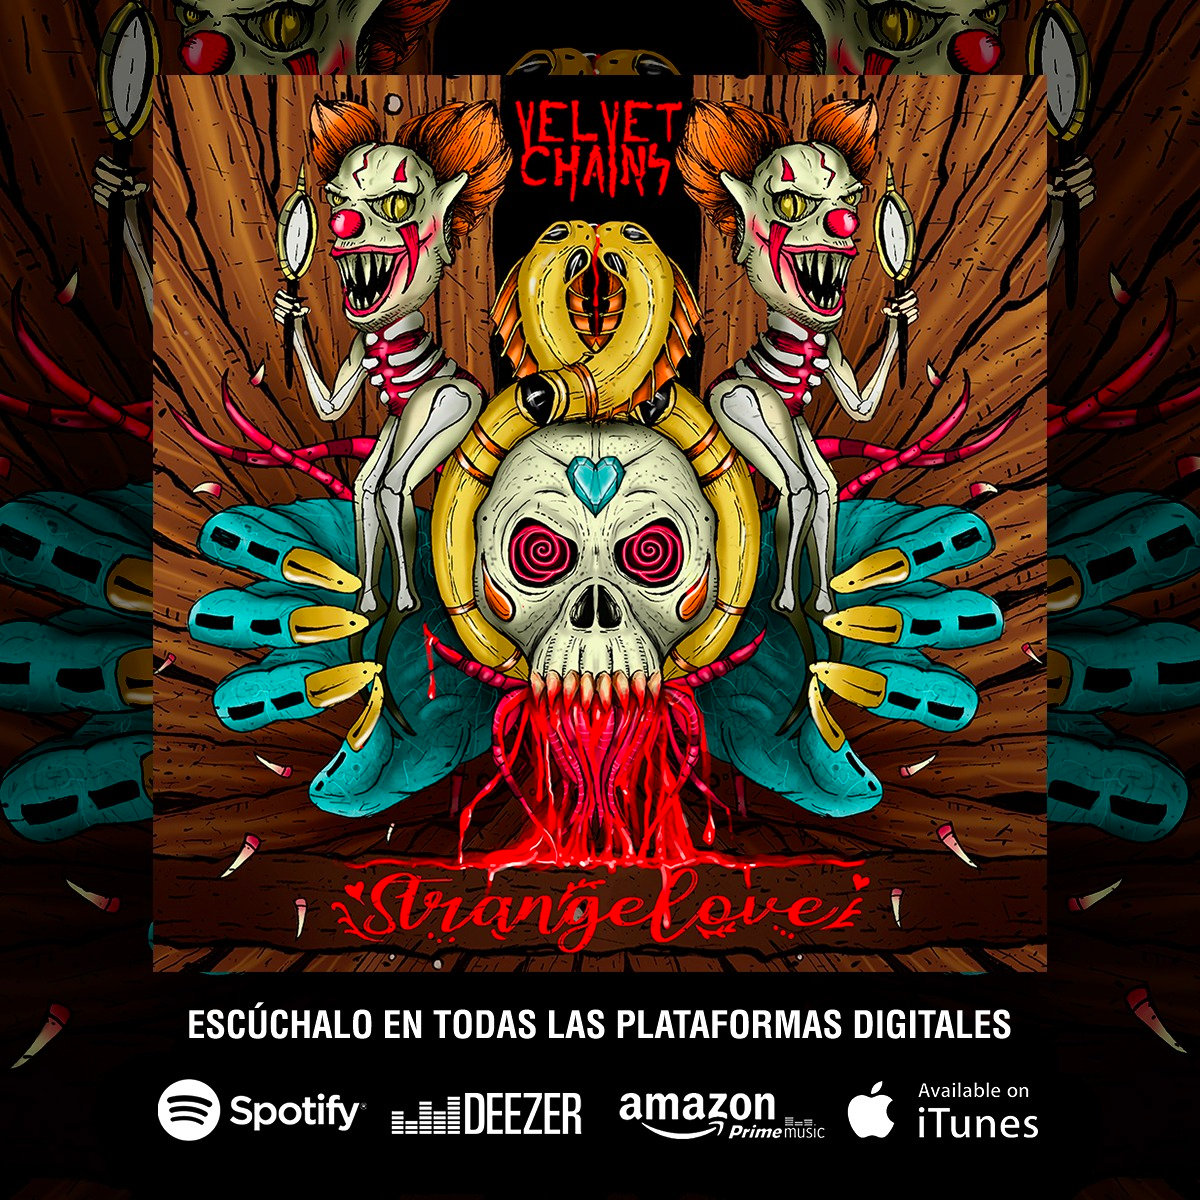 Velvet Chains lanza nuevo sencillo “Strangelove”